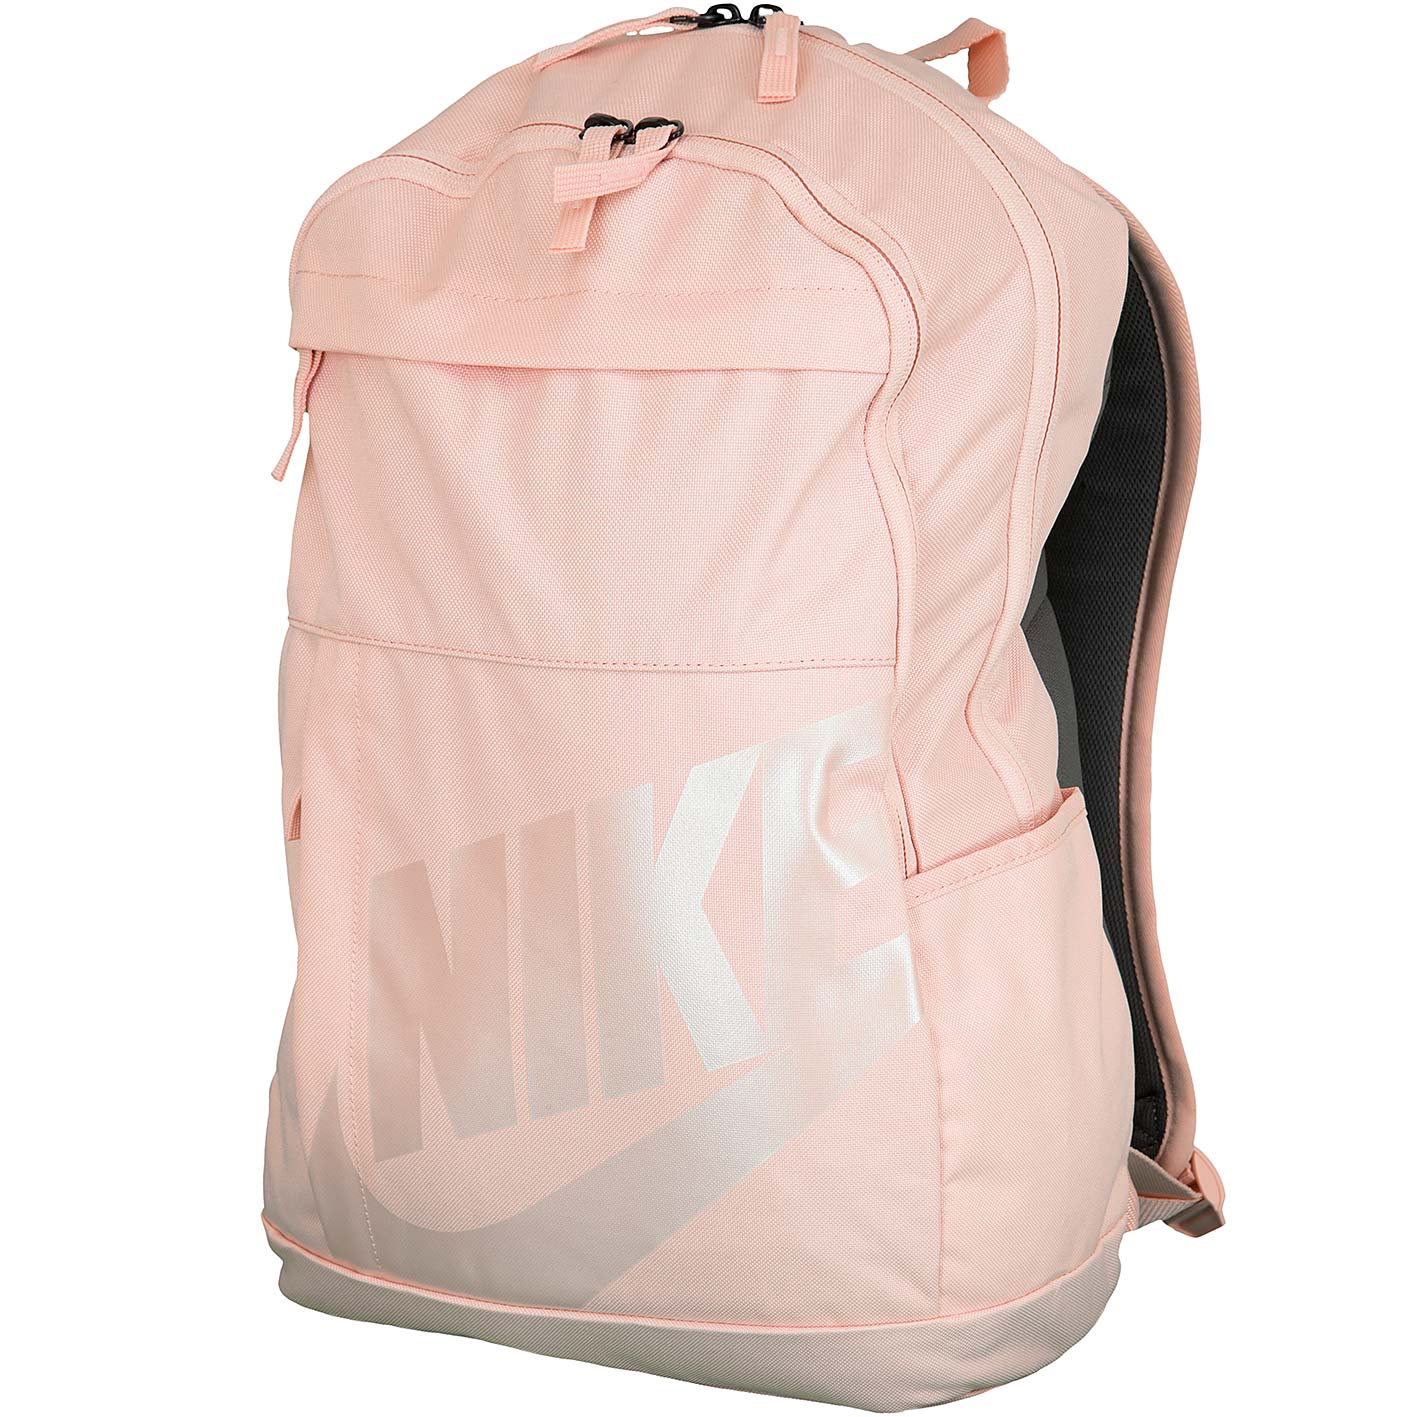 ☆ Bag Nike Elemental 2.0 rosa - hier bestellen!